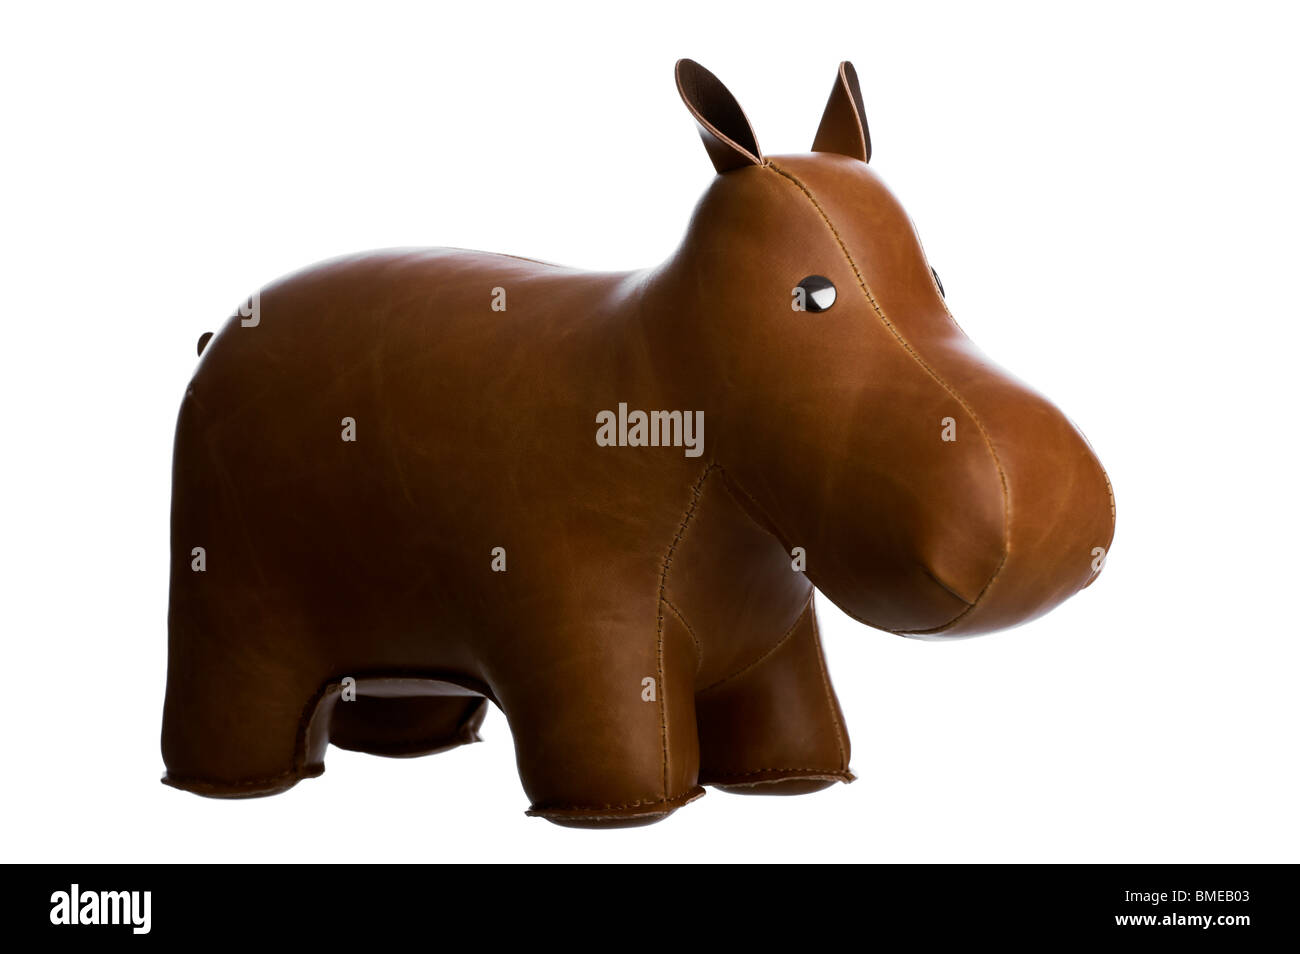 Toy hippo Stock Photo